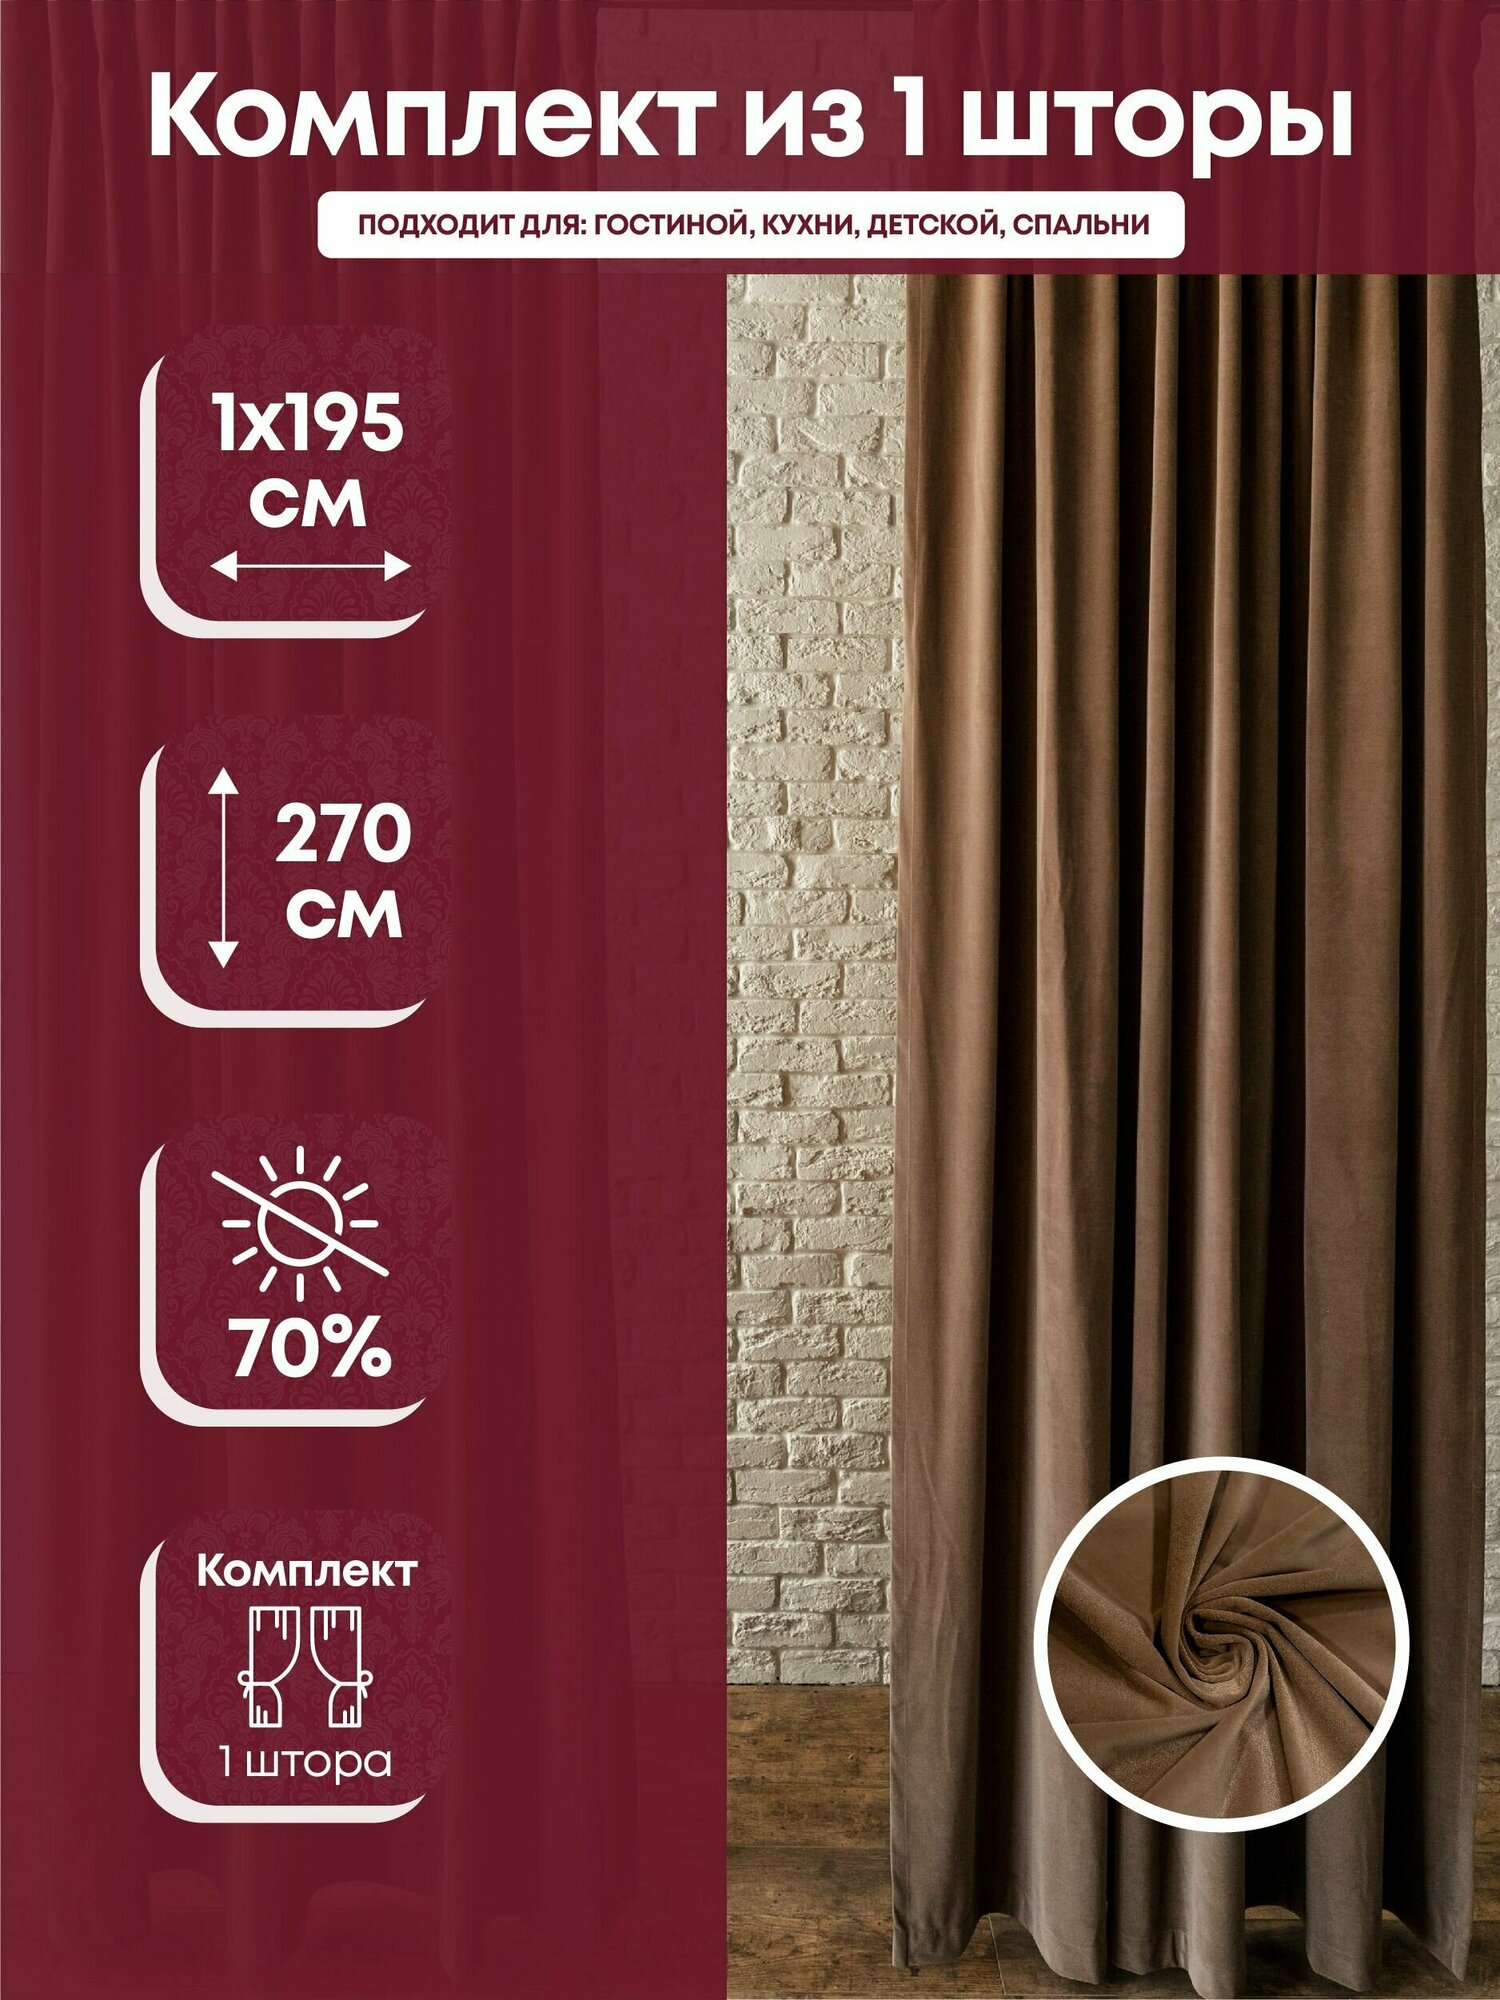 Комплект штор тефи "Велюр" цвет шоколад 195 х 270 см, 1 шт.